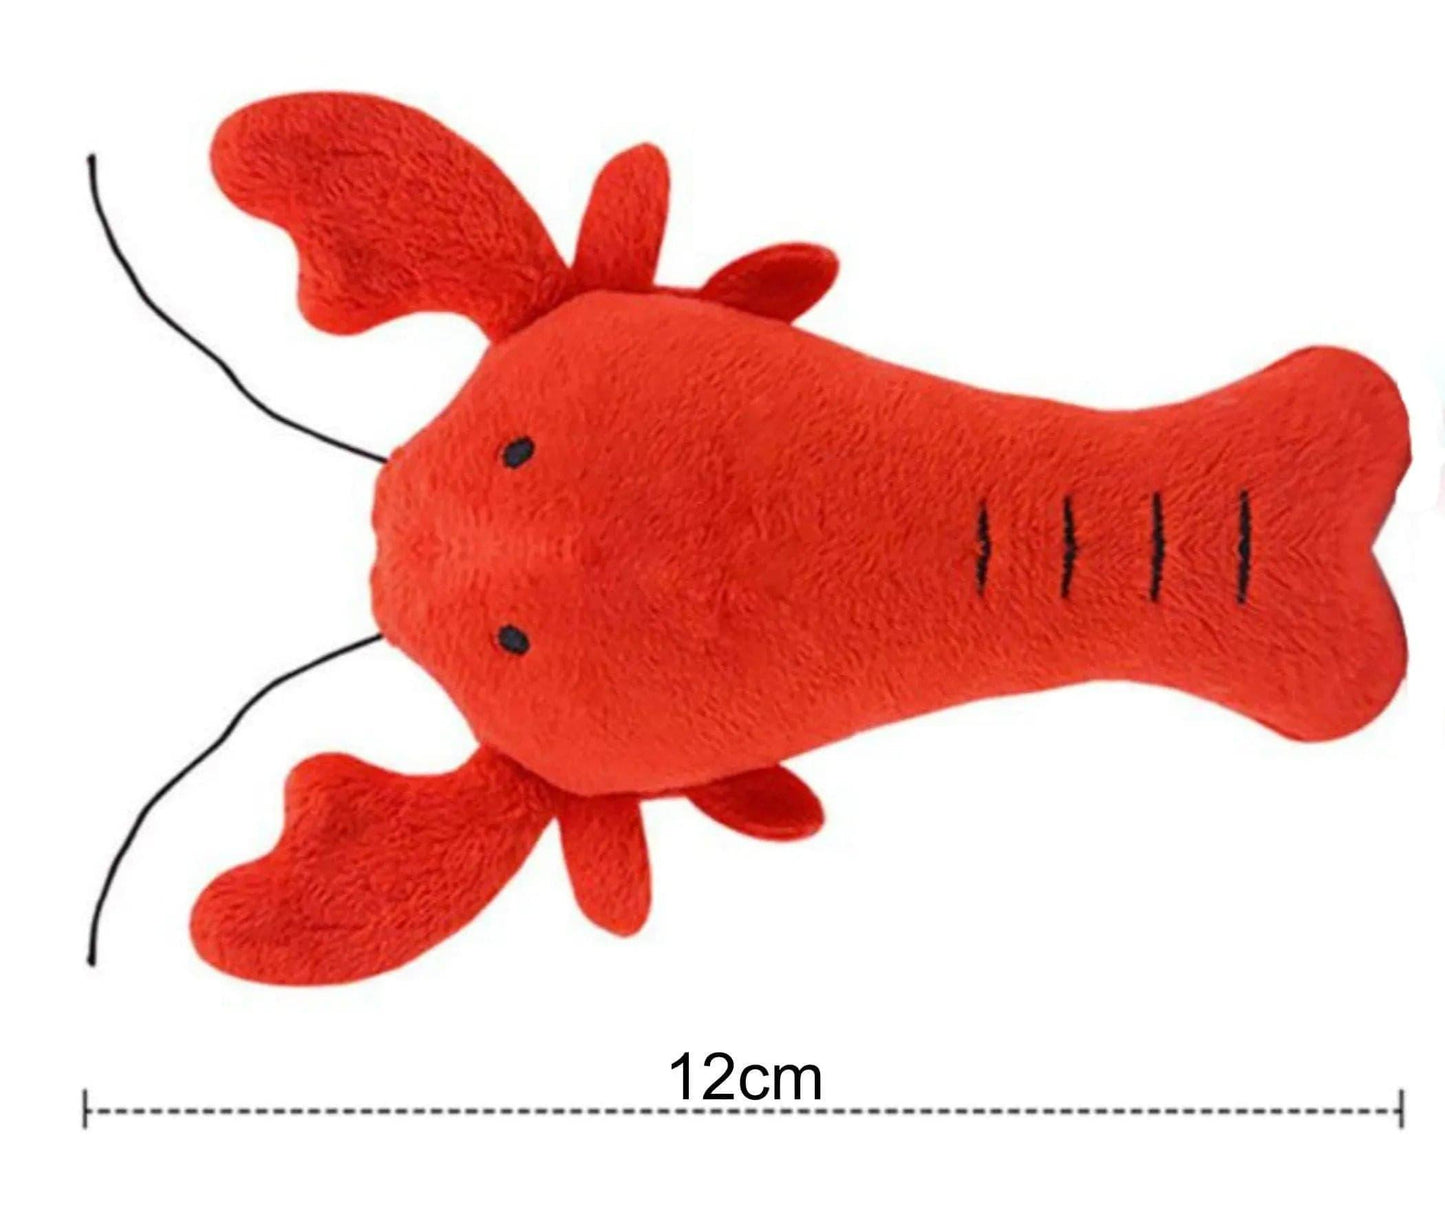 Lobster Plush Toy - Puppy Artisan